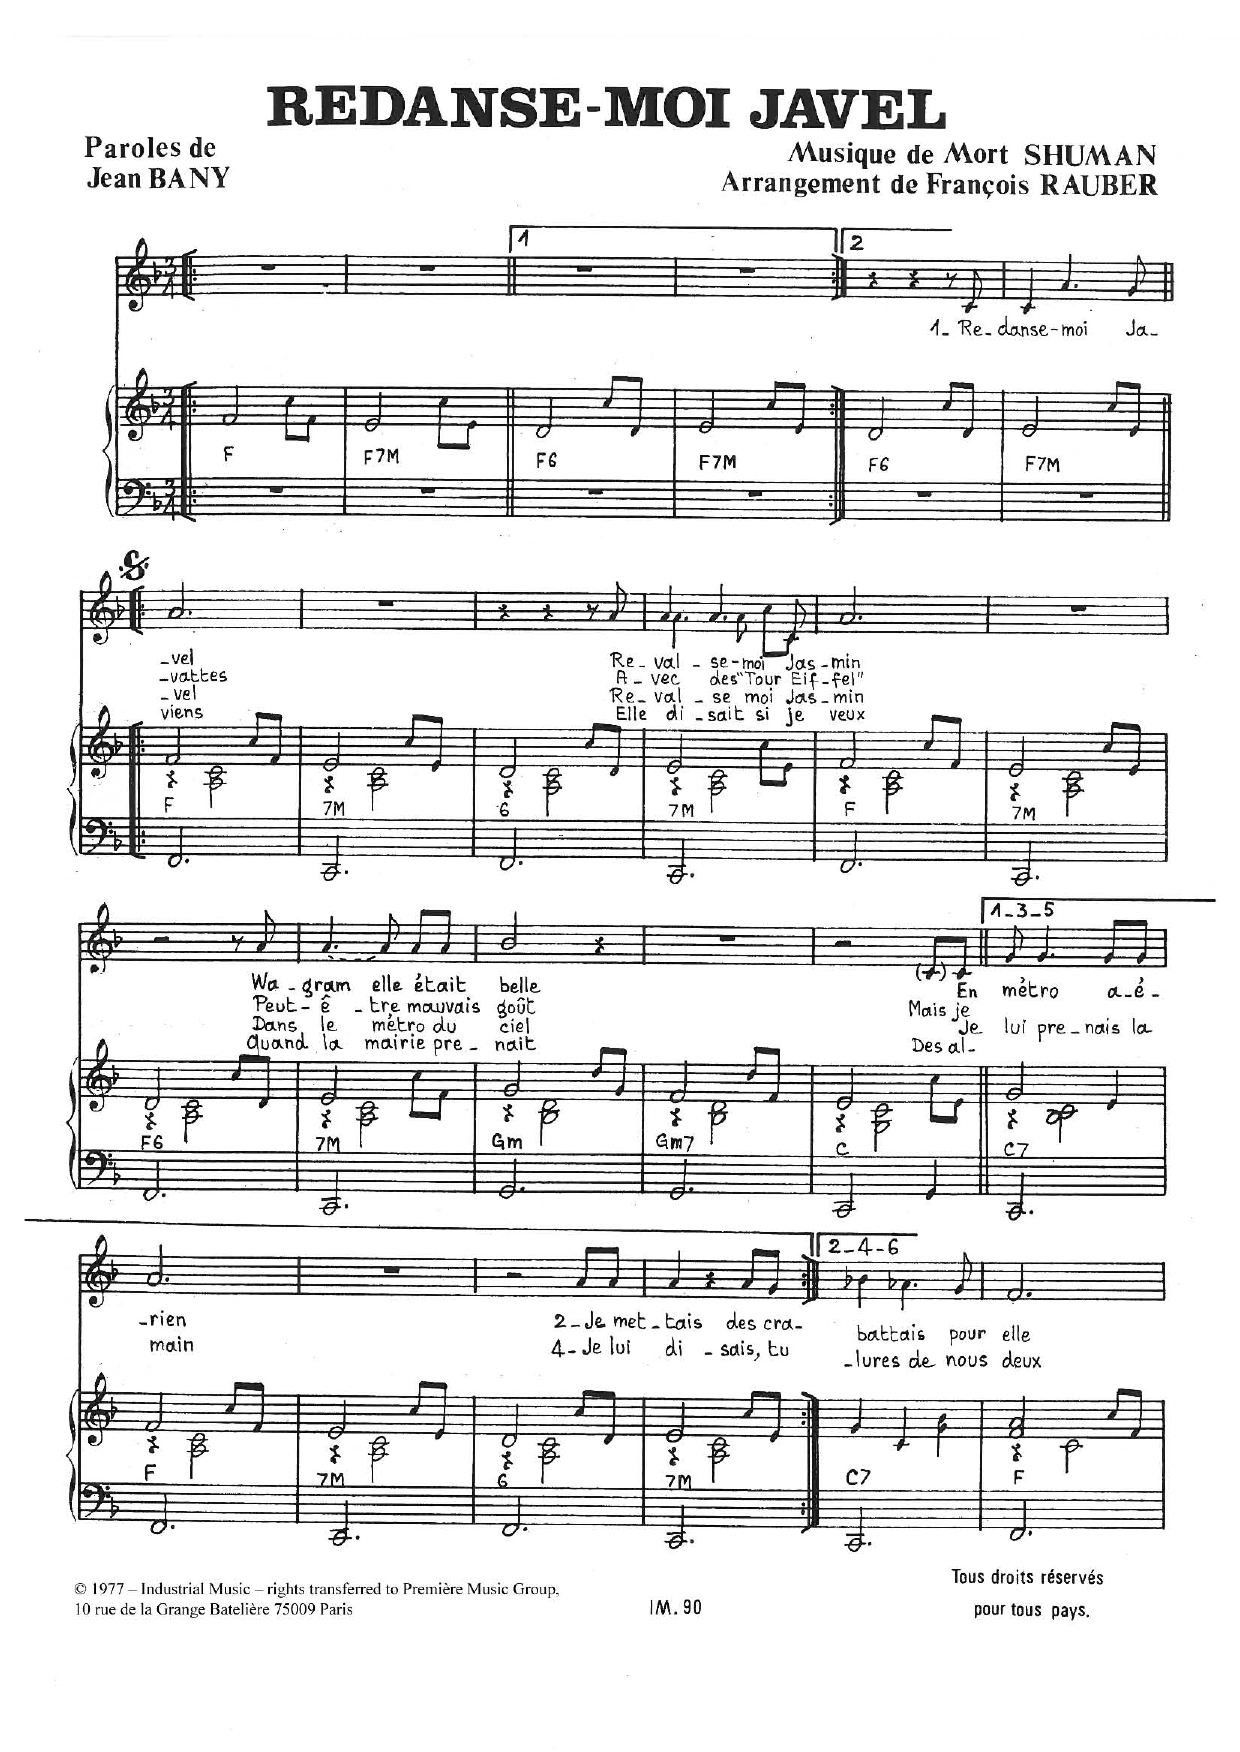 Mort Shuman Redanse-Moi Javel Sheet Music Notes & Chords for Piano & Vocal - Download or Print PDF